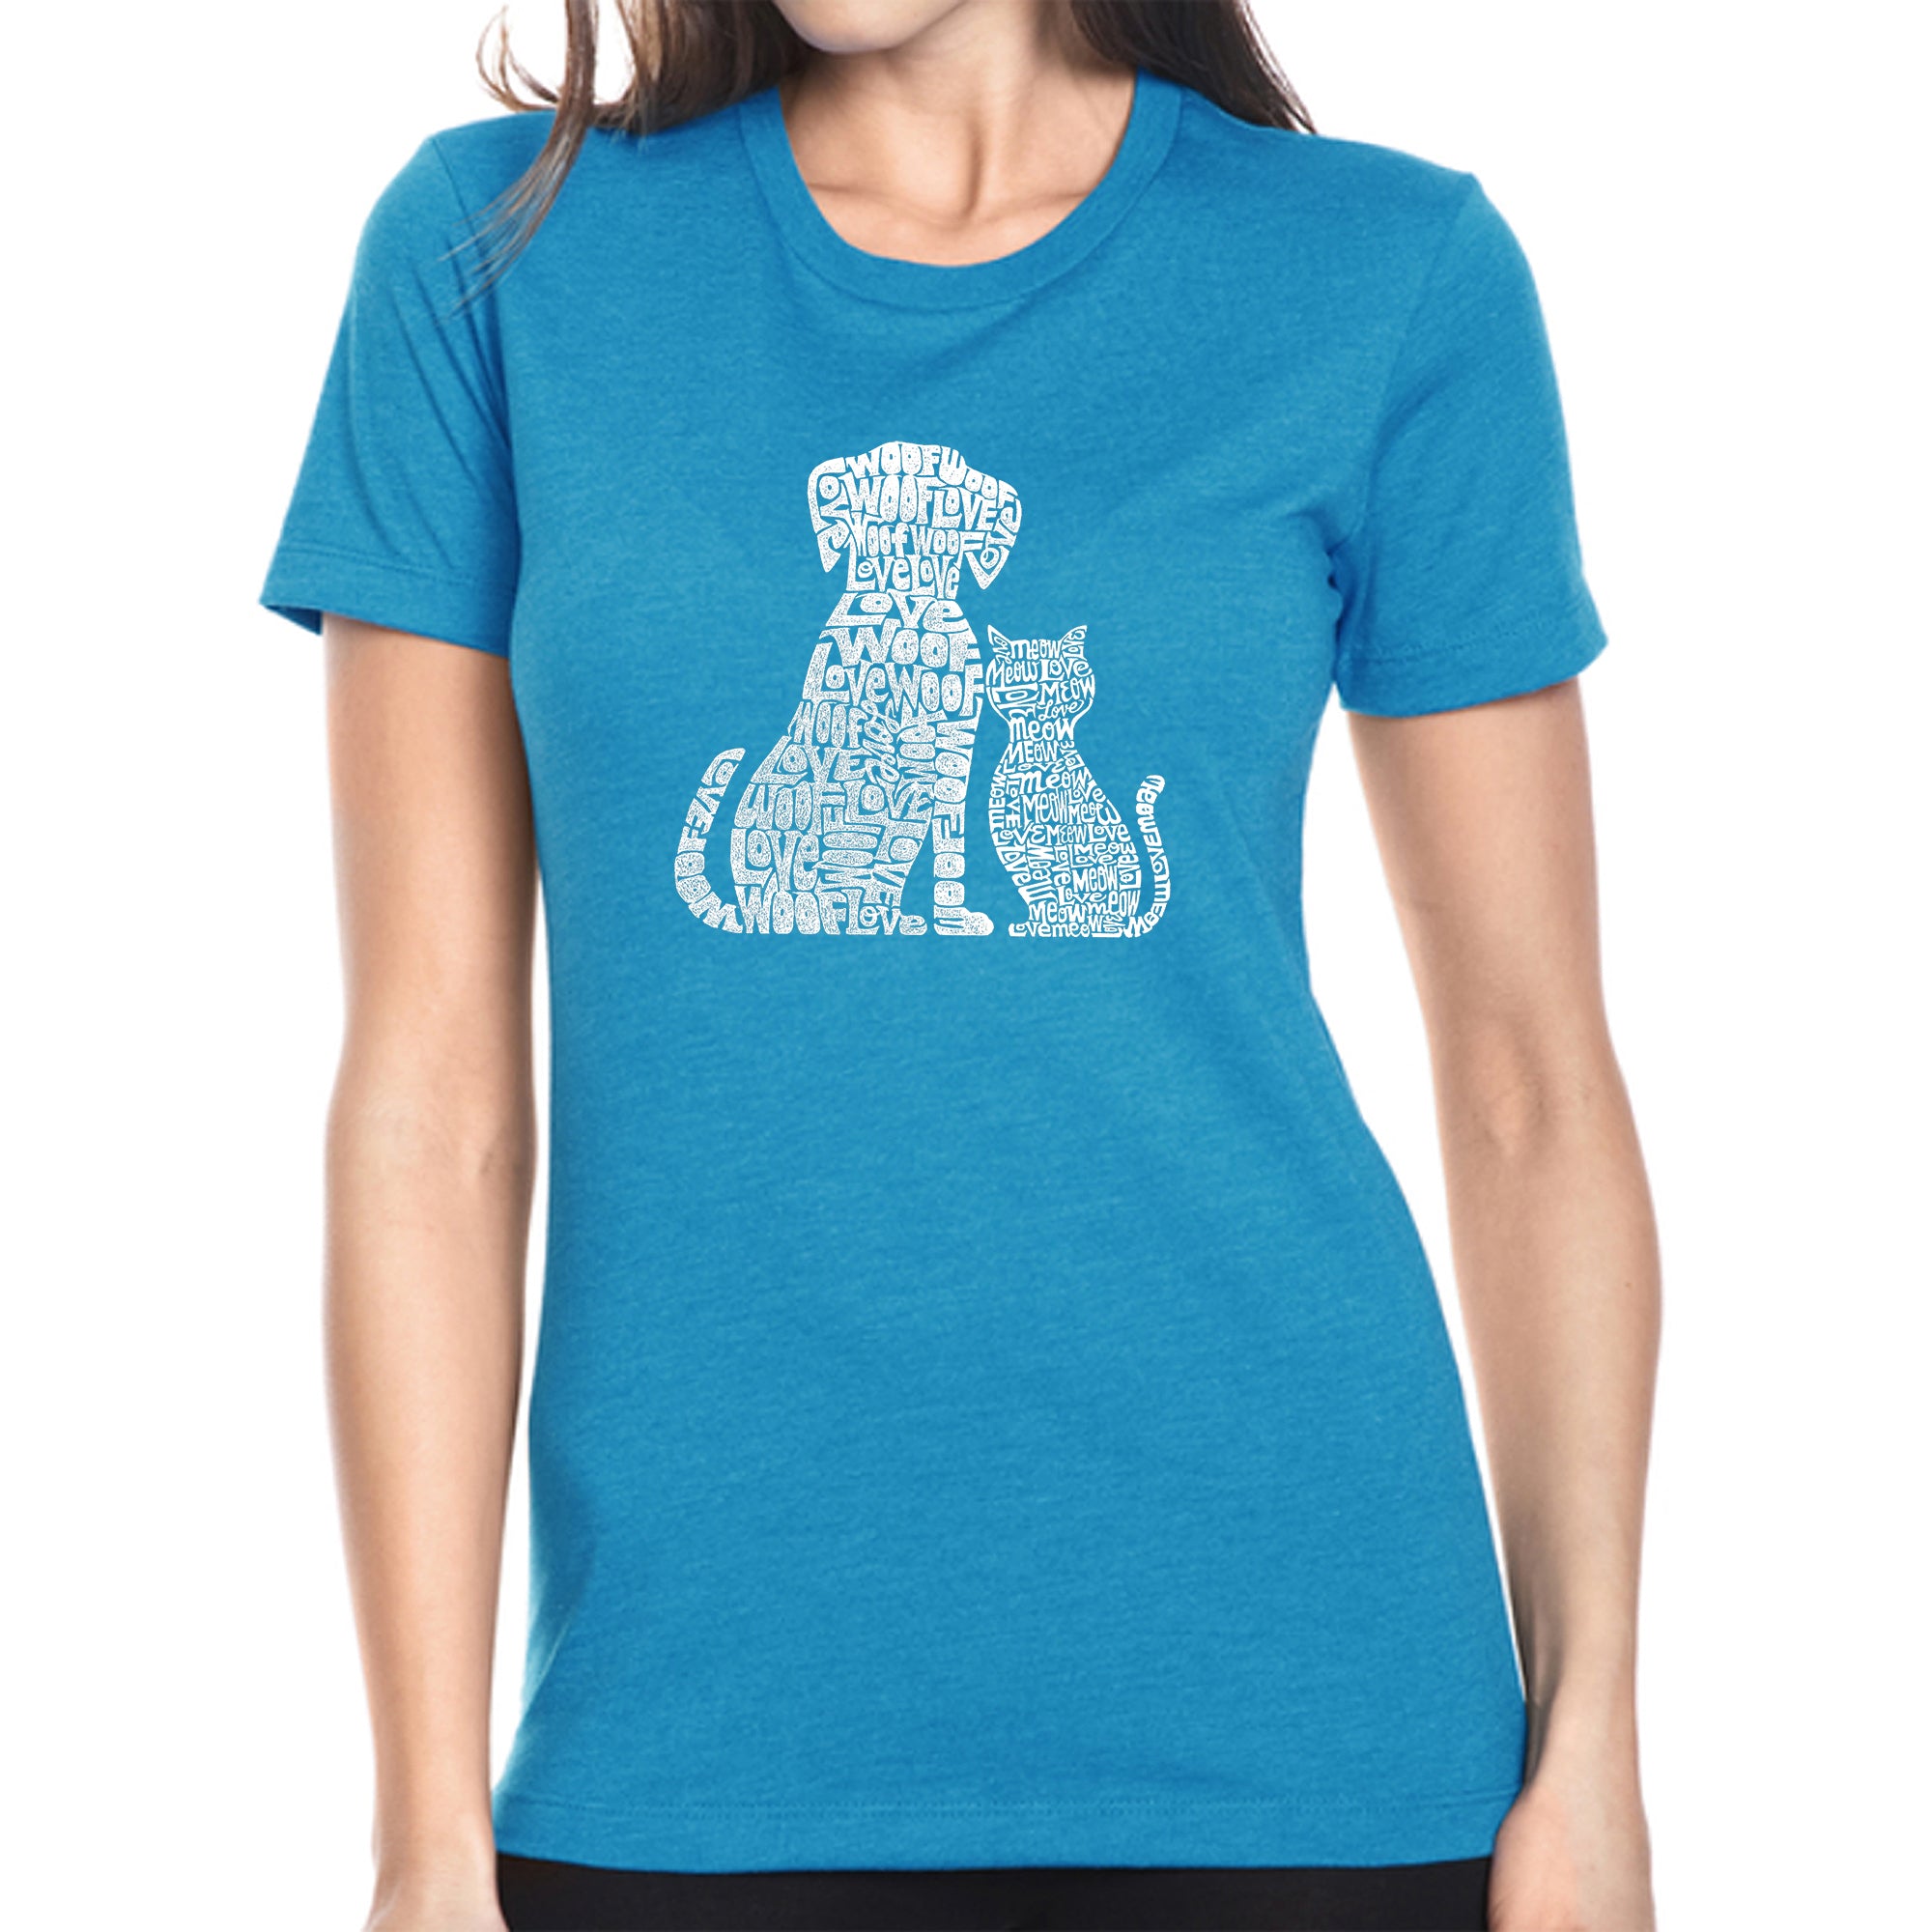 Dogs And Cats - Women's Premium Blend Word Art T-Shirt - Turquoise - Medium